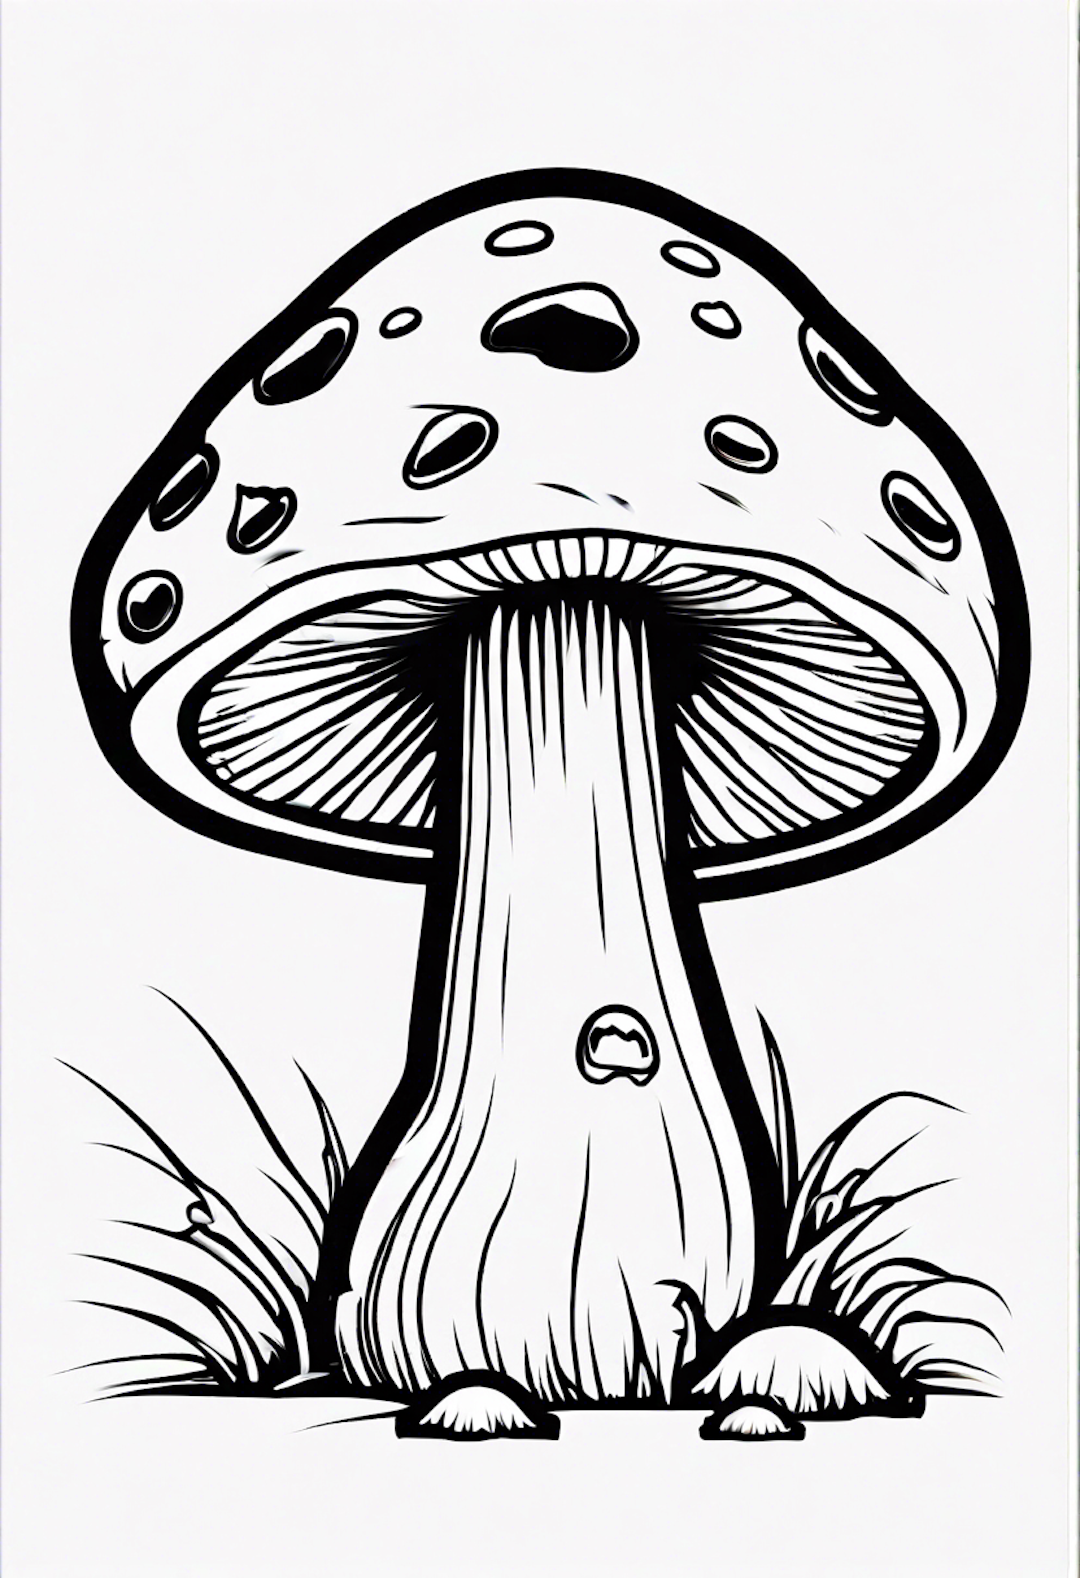 A Cartoon Mushroom Eating